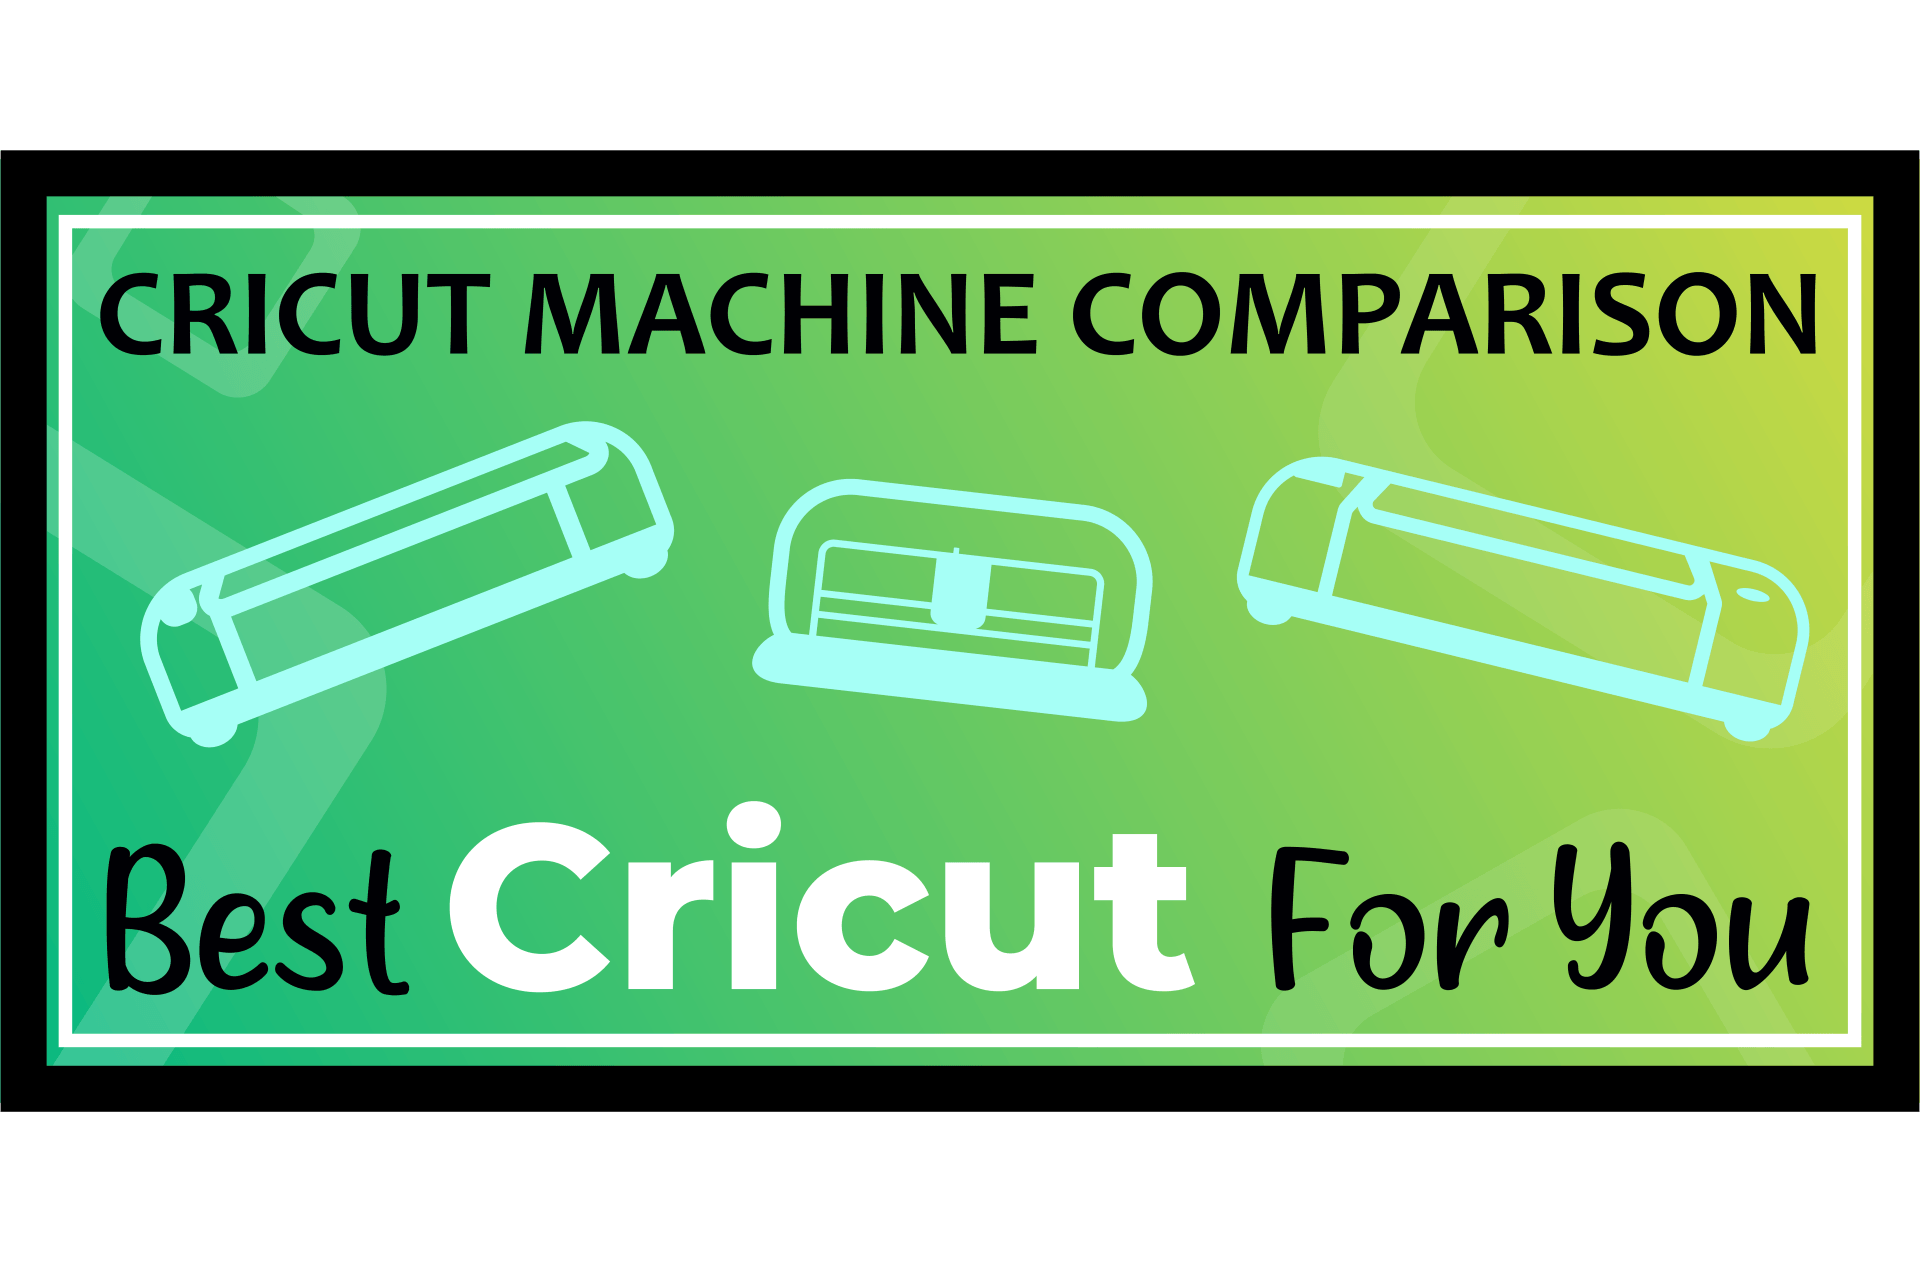 The Best Cricut Machine For You (Cricut Machine Comparison)